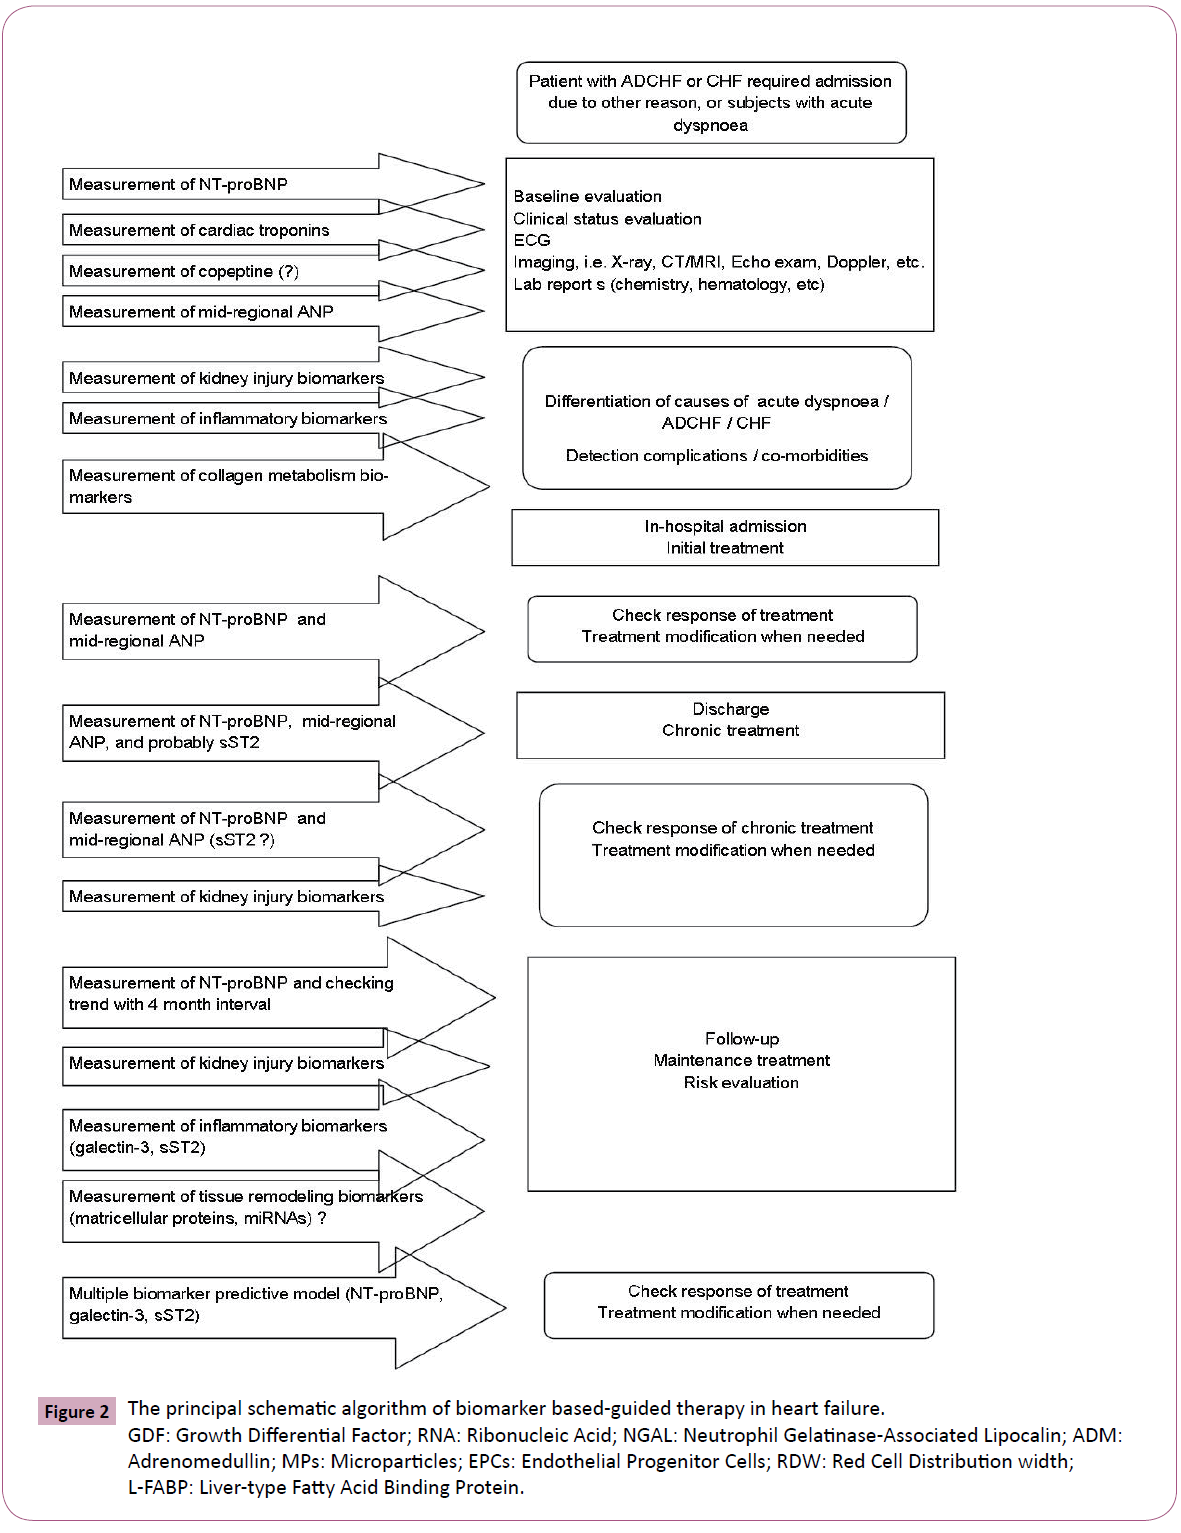 annals-clinical-laboratory-schematic-algorithm